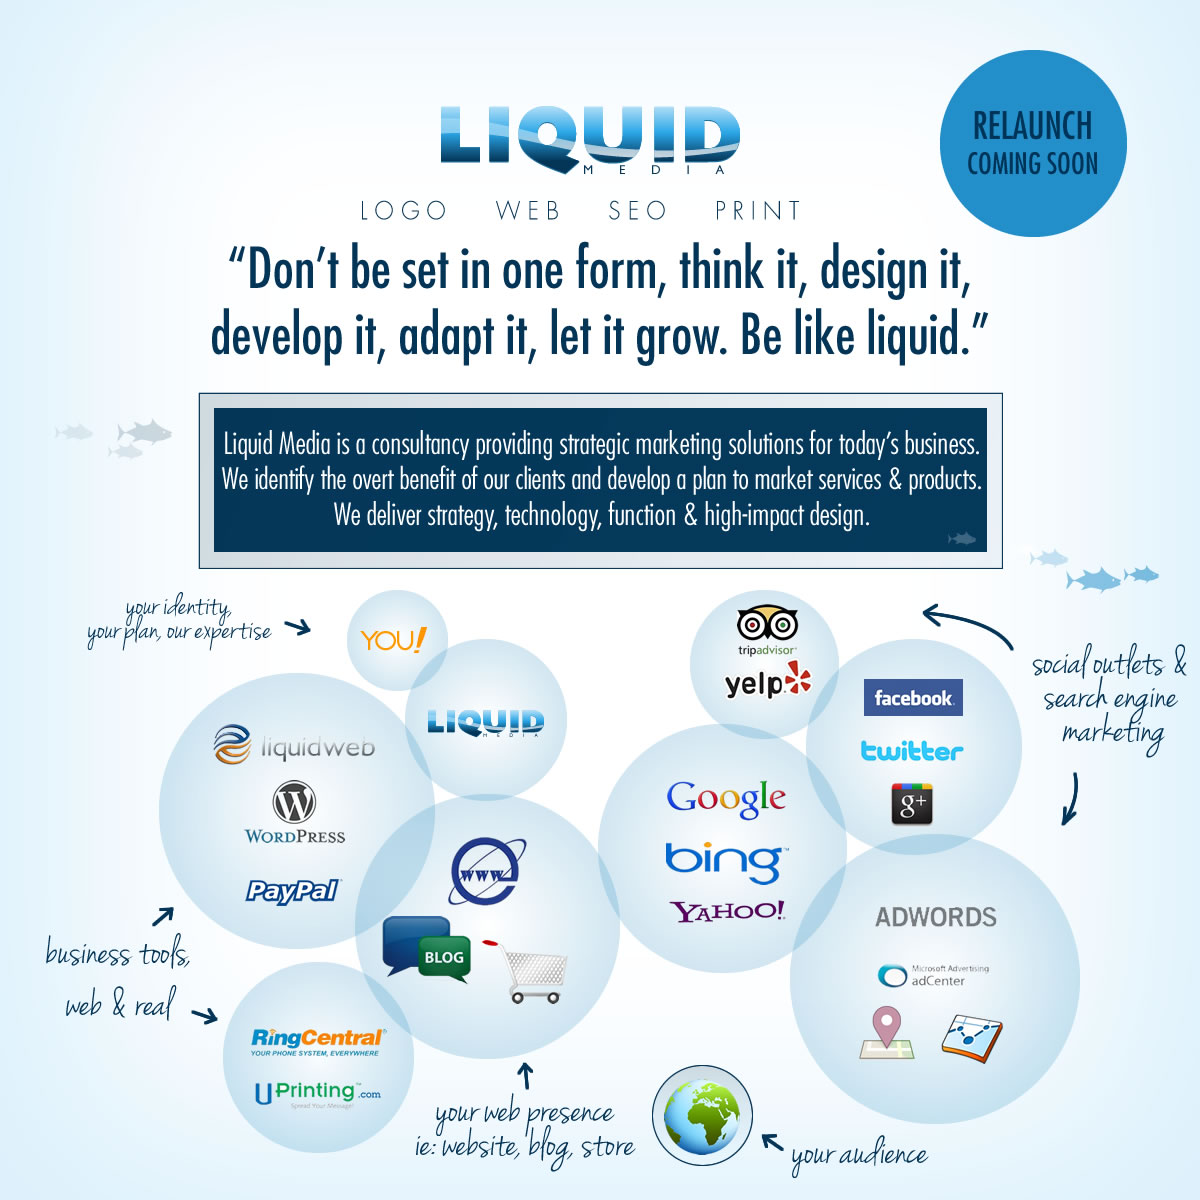 Maui Web Design by Liquid Media